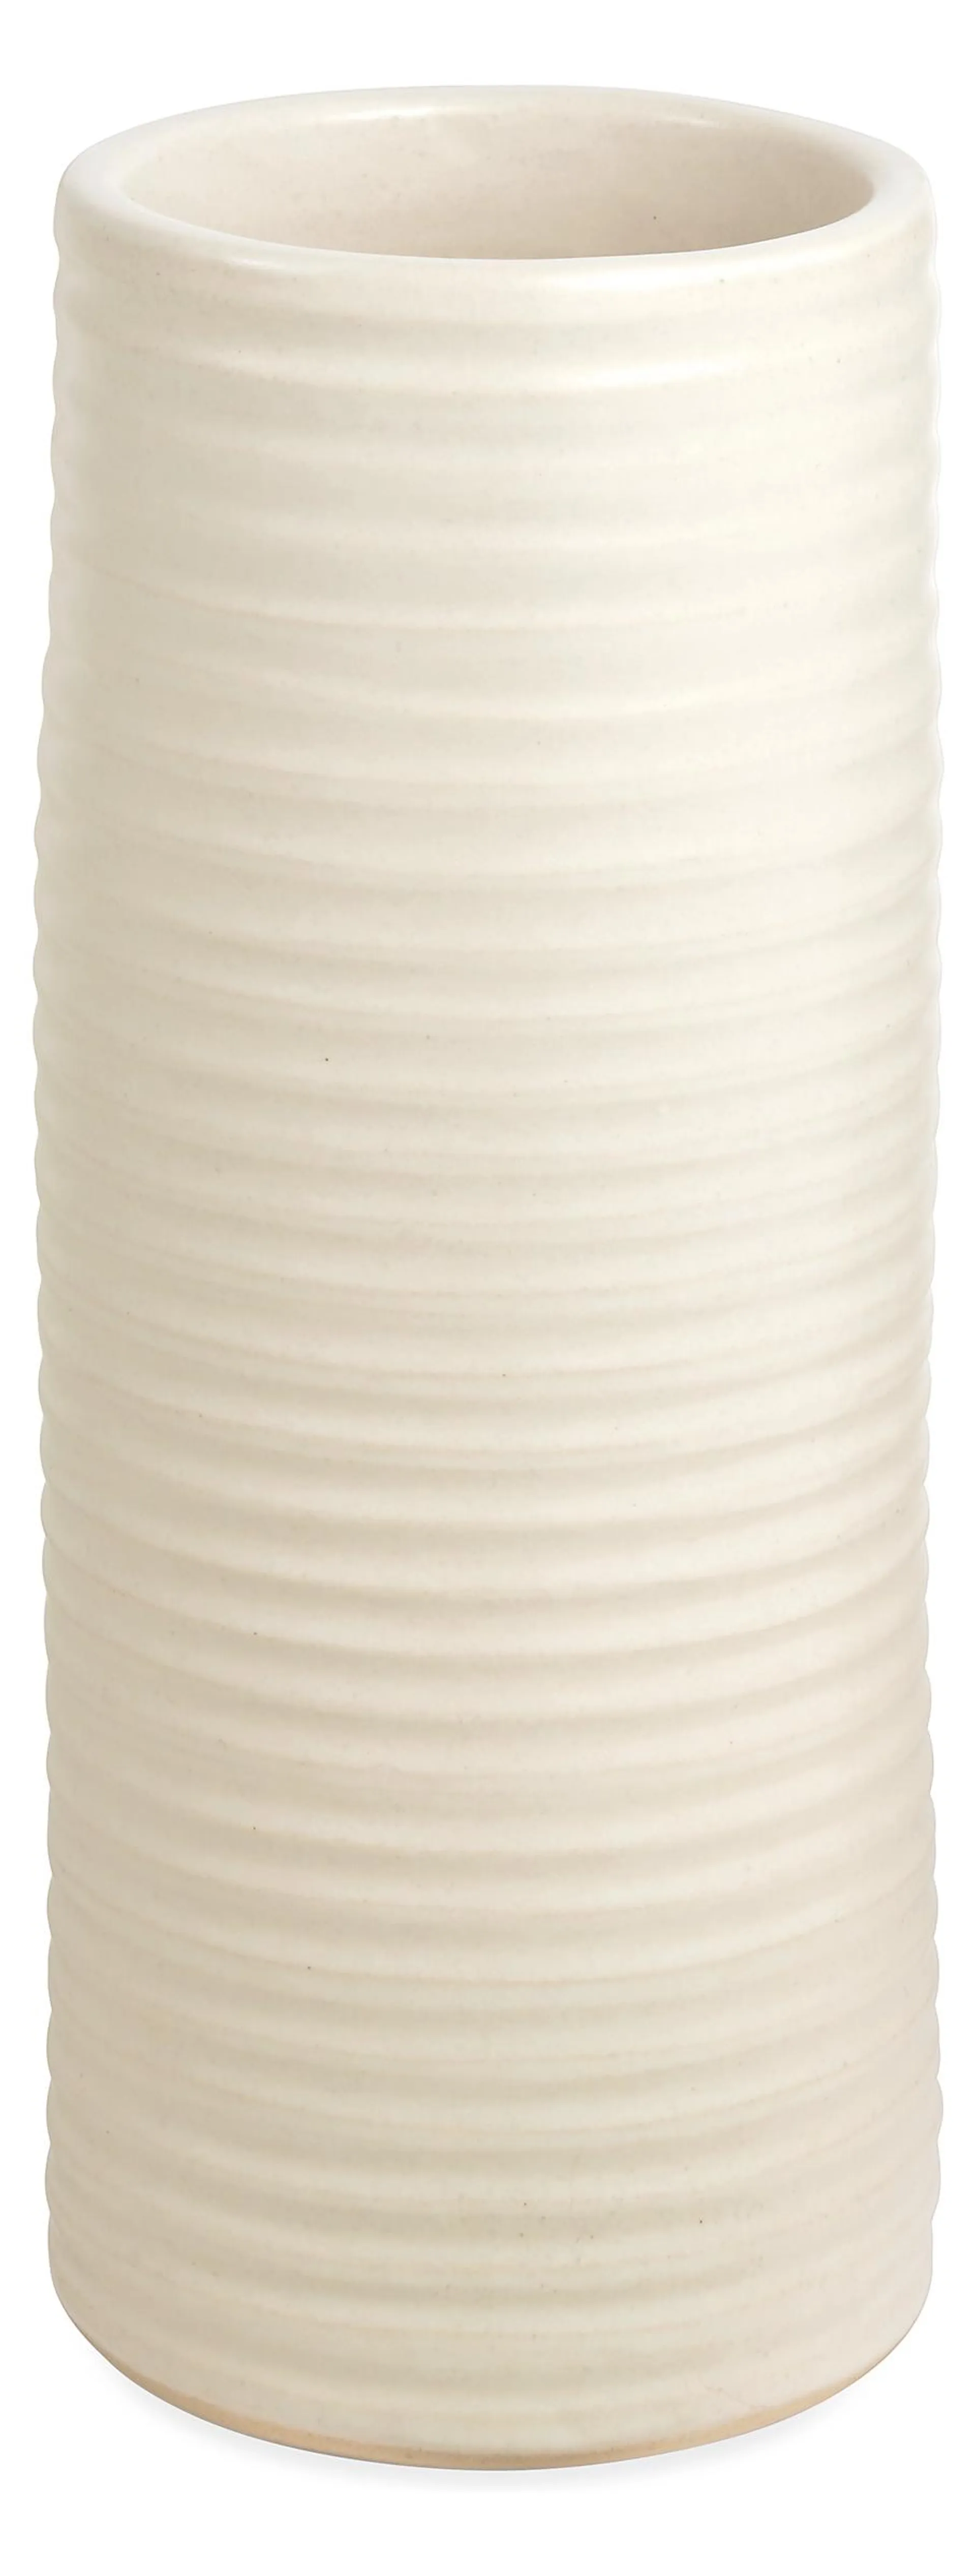 Forage Vase in Ivory